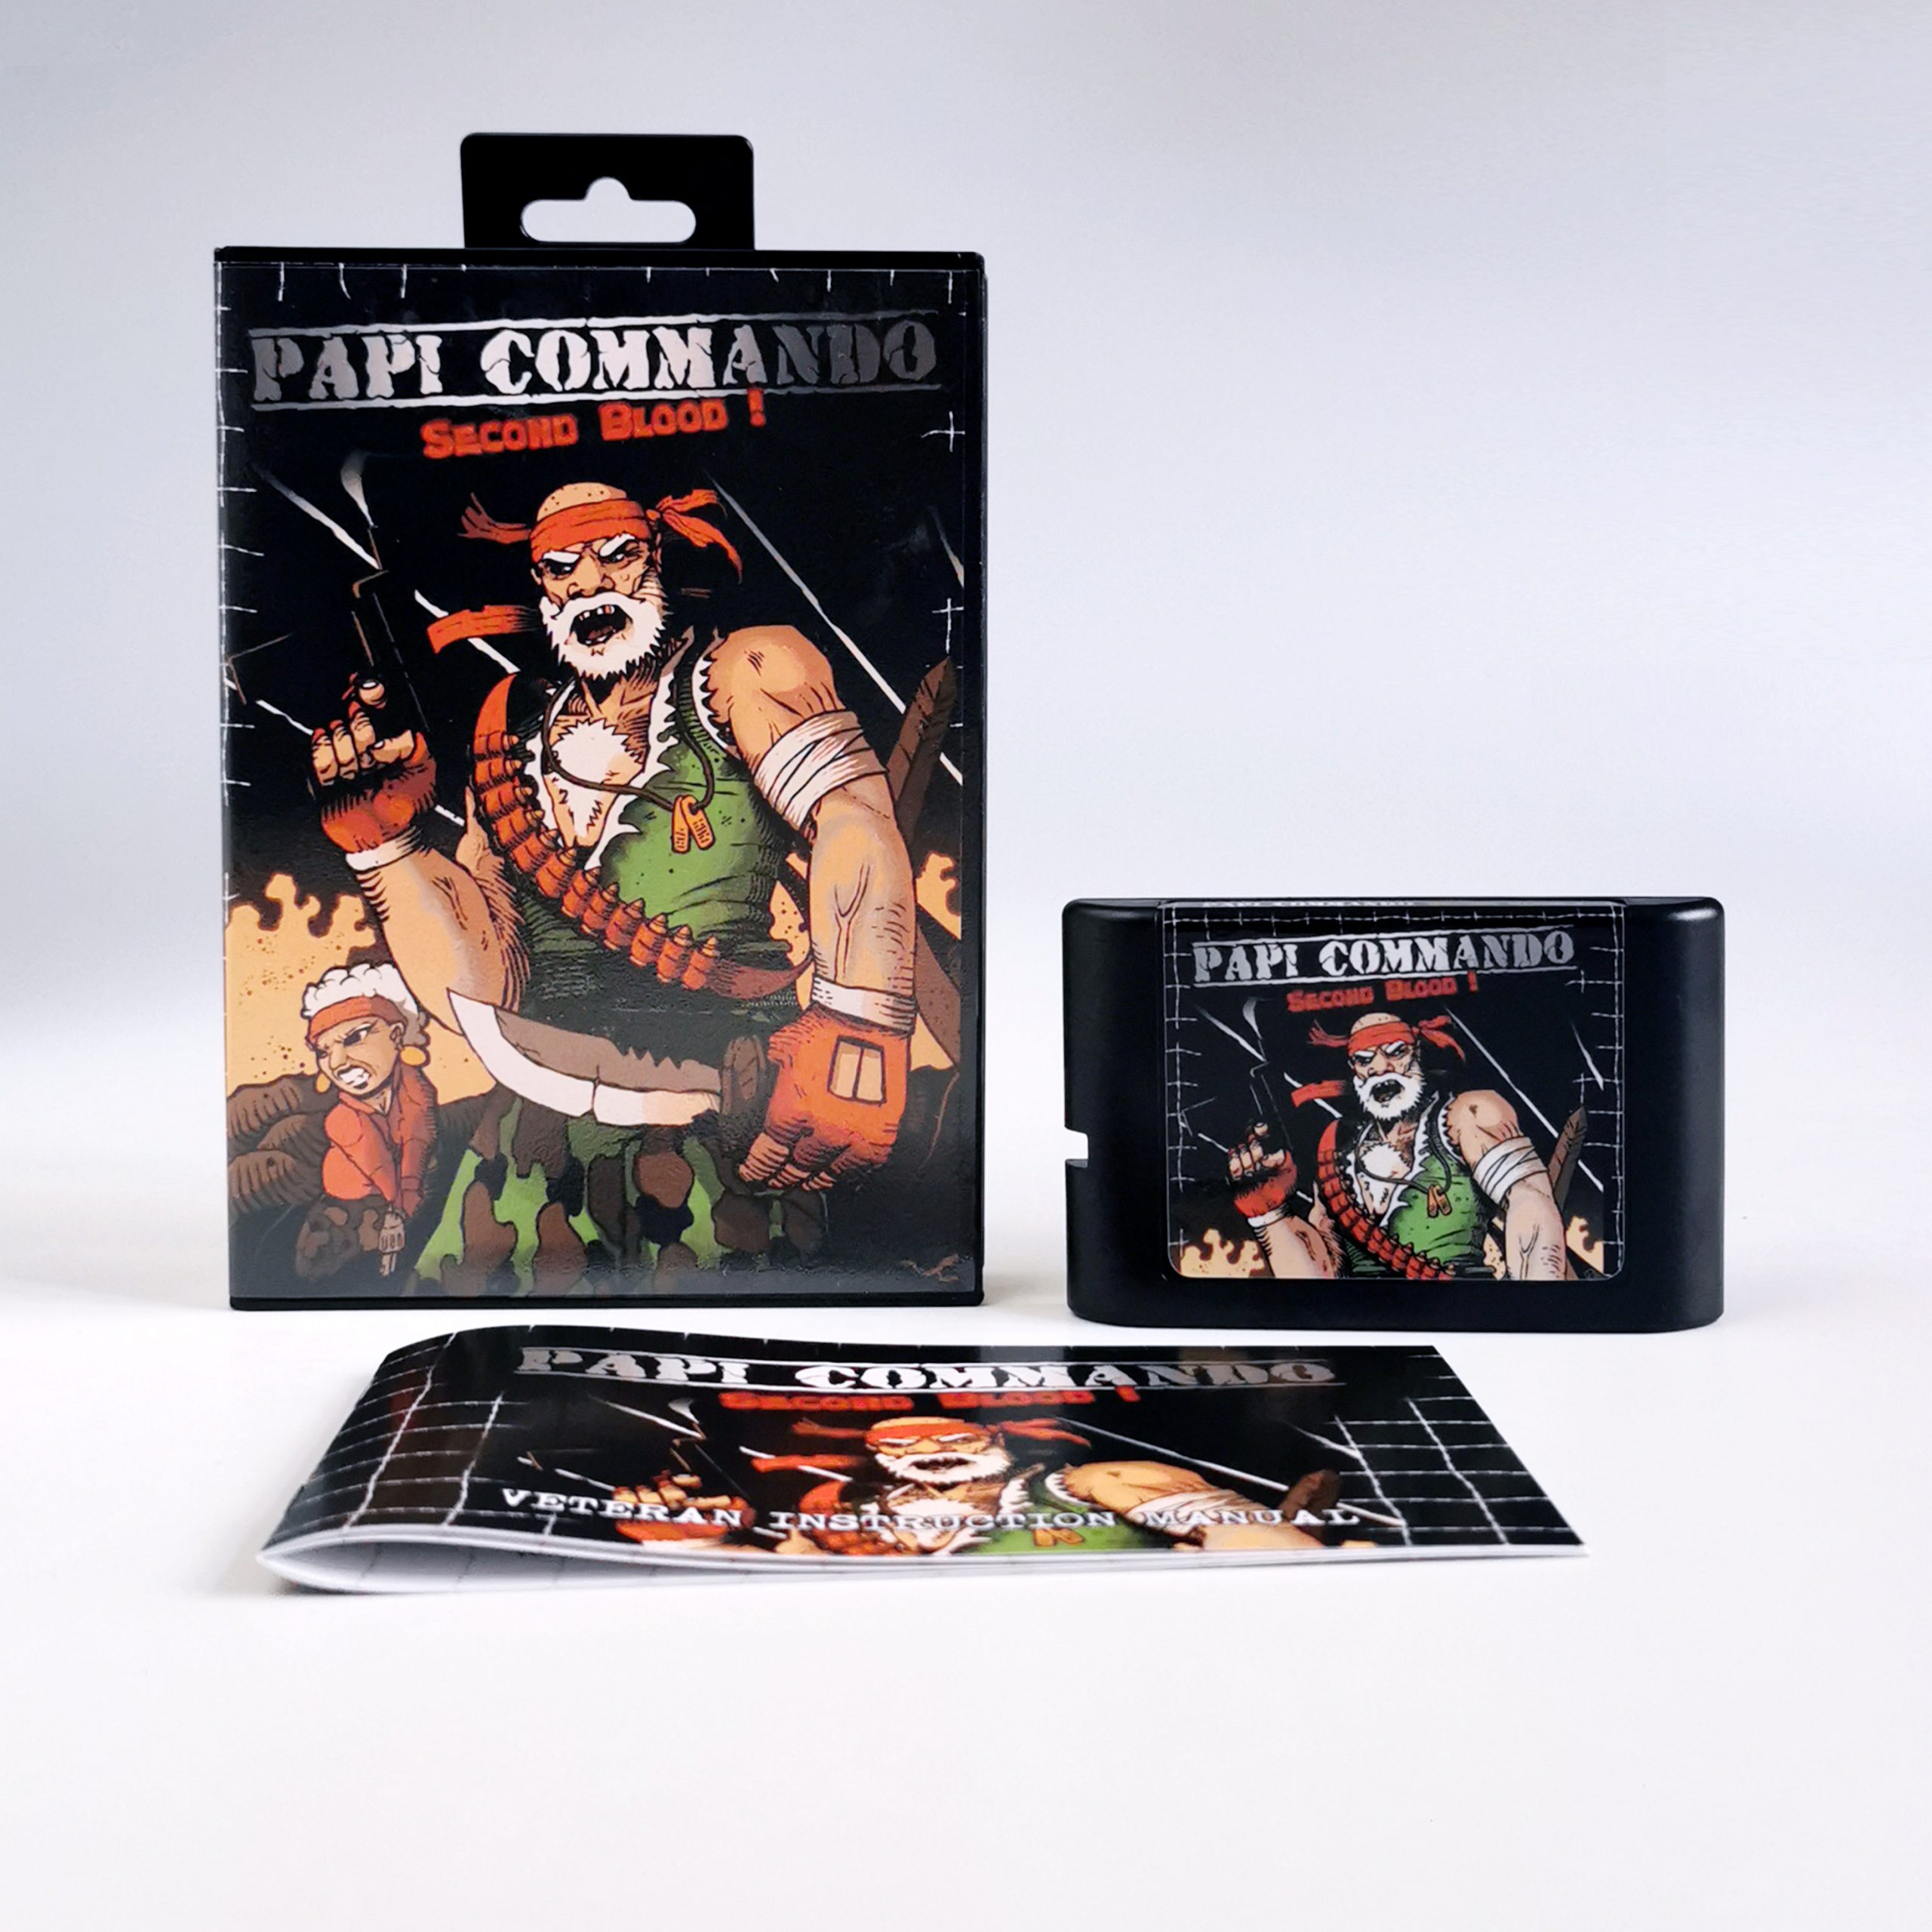 💣 Papi Commando 2: Second Blood, Review, 8/10, Mega Drive, There's No  Blood Like Second Blood 💣 @Broke_Studio #IndieGames #GameDev #HomeBrew  #SEGA, Games Freezer